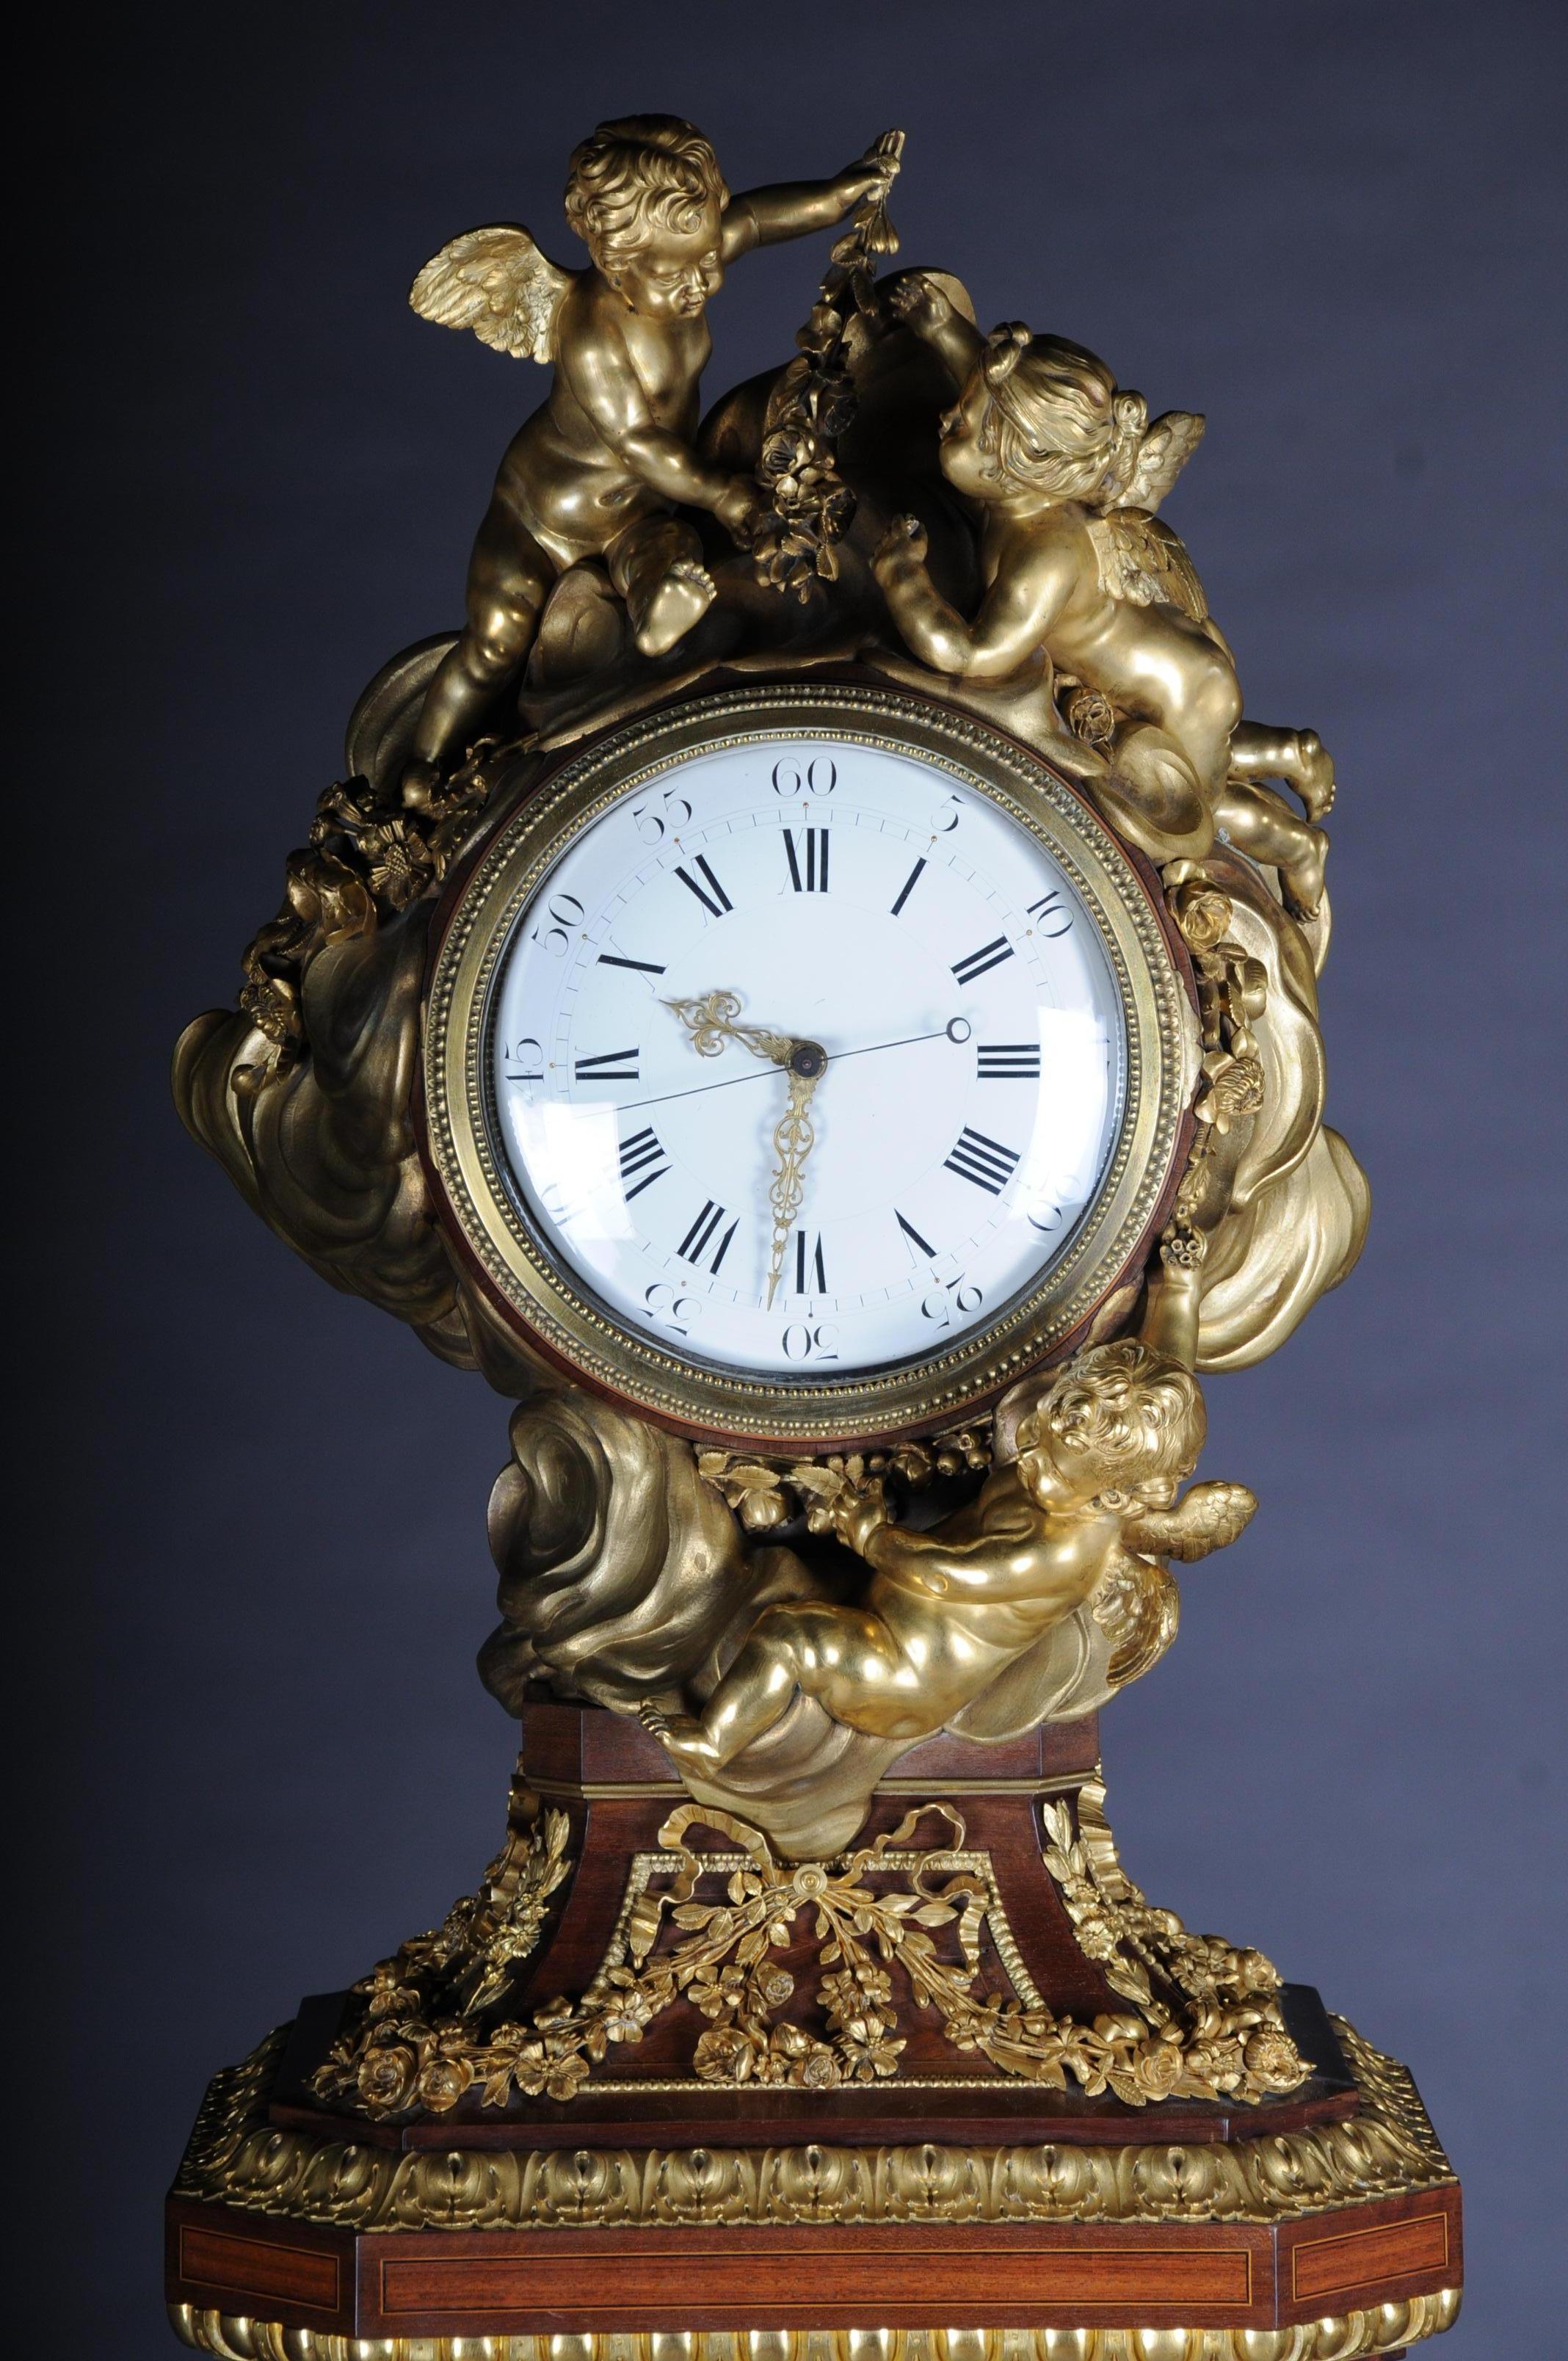 19th Century Napoleon III Pedestal Clock “Parquet Regulator” after Jean-Henri Riesener, 1734 For Sale